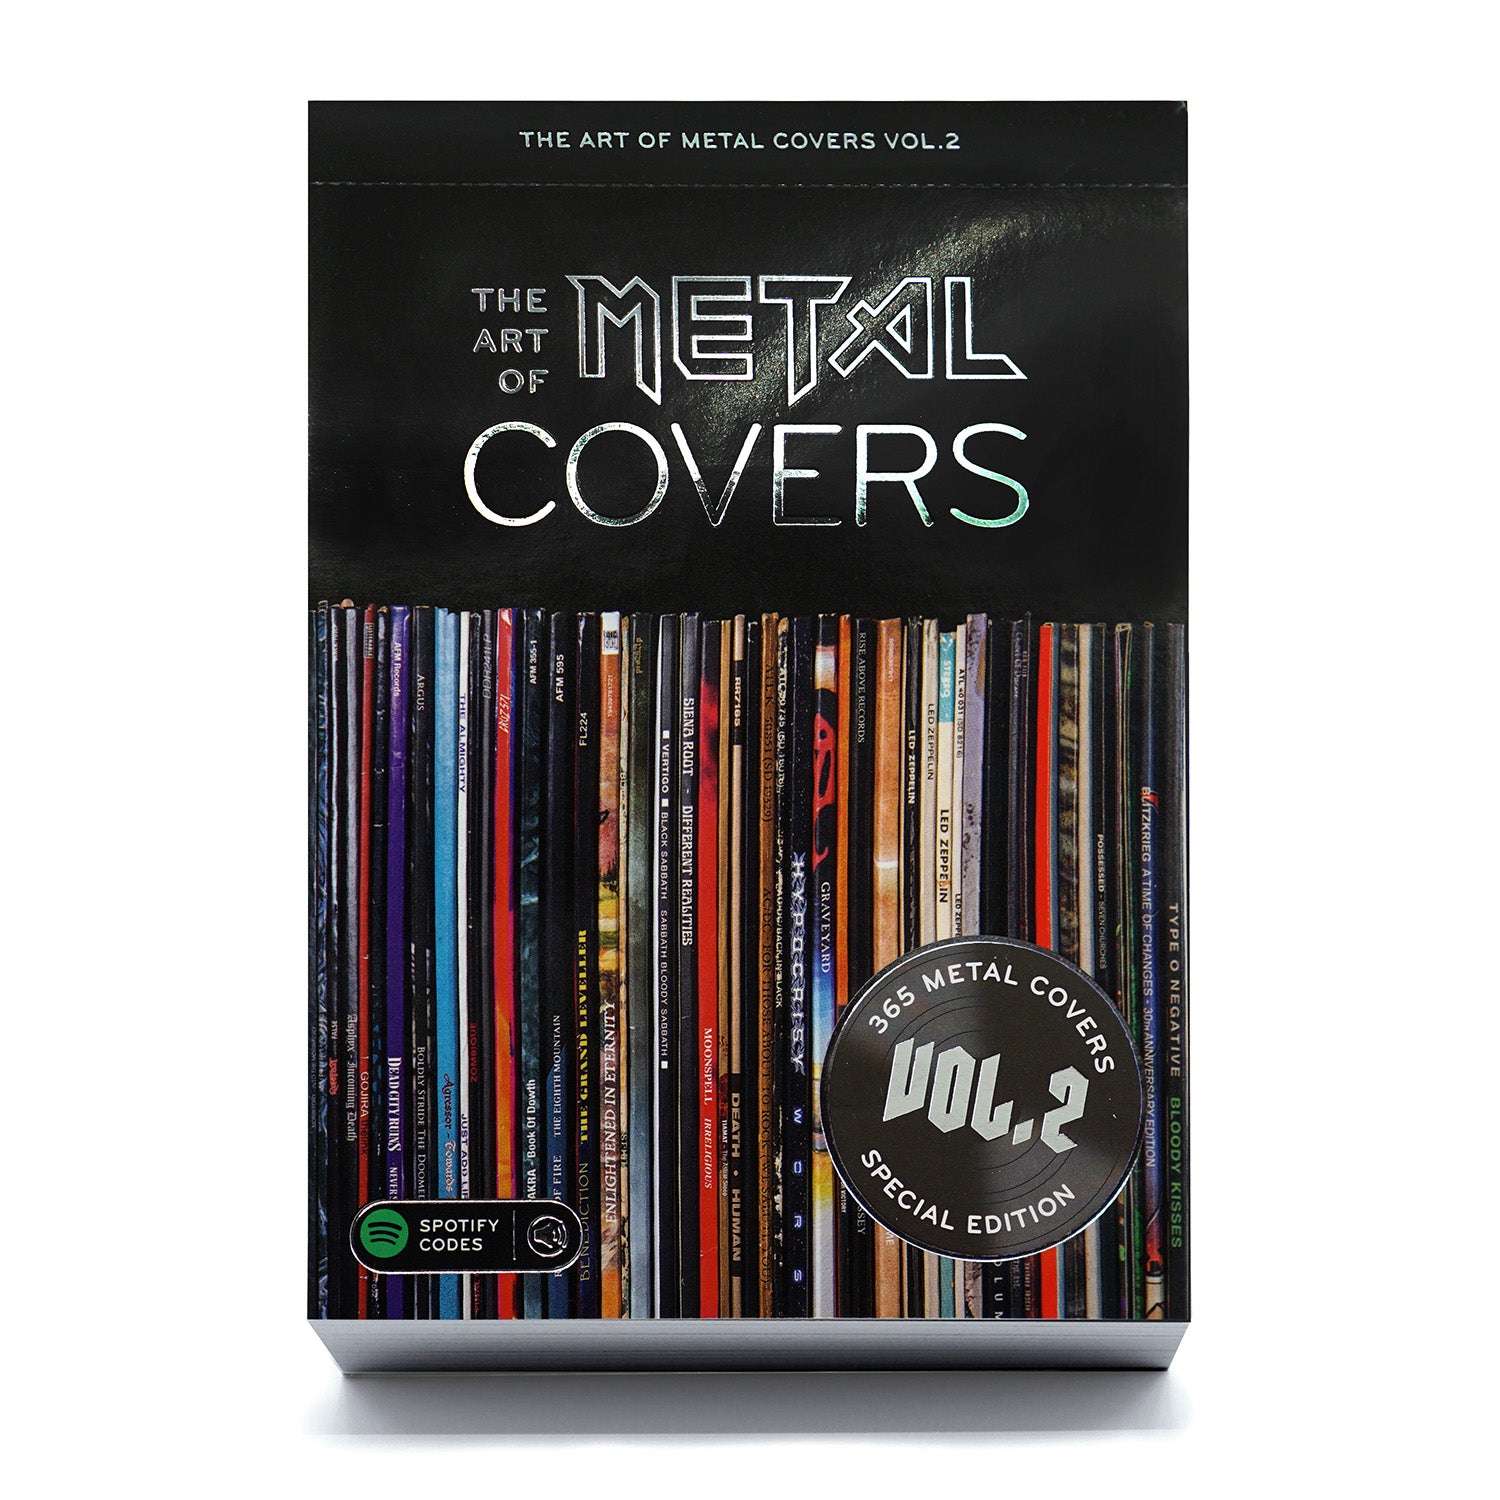 The Art of Metal Covers Vol. 2